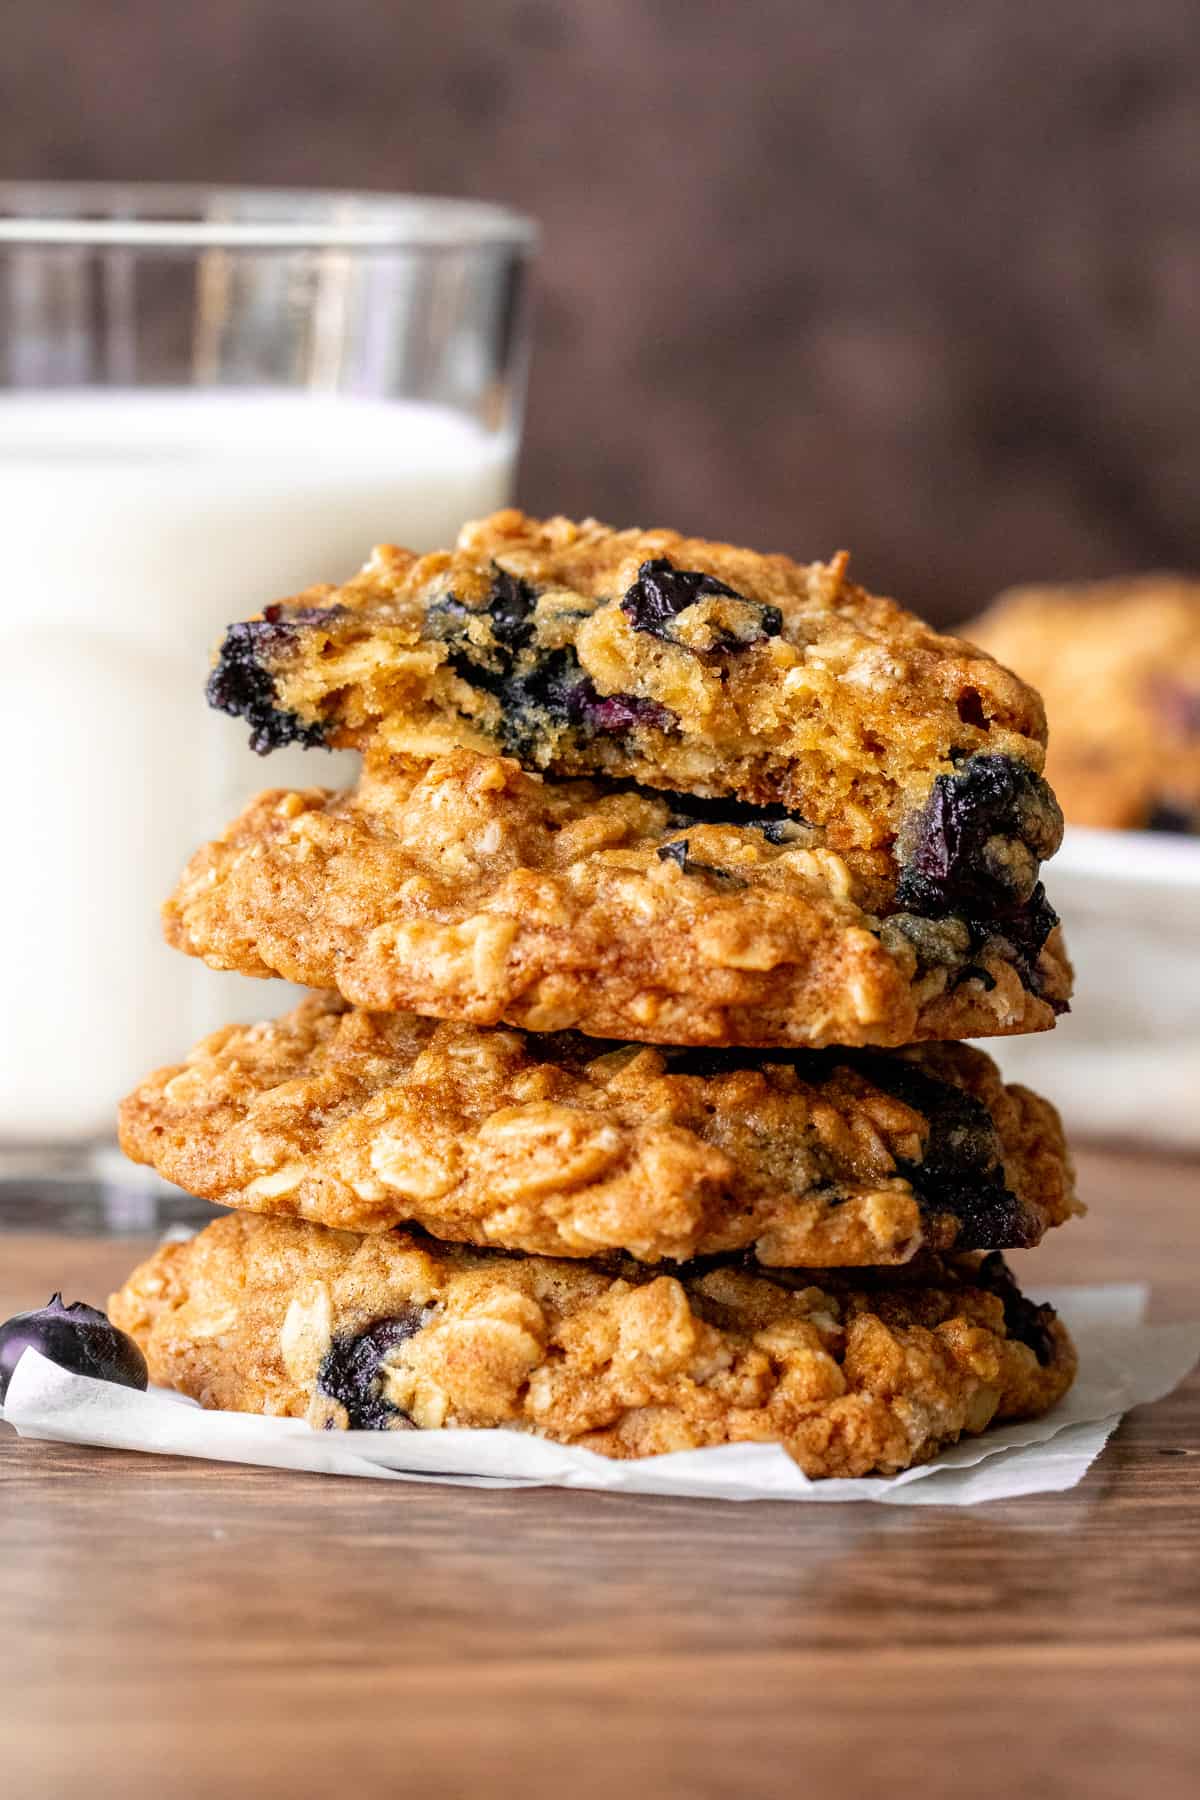 Stack of blueberry oatmeal cookies, with top cookie broken in half.